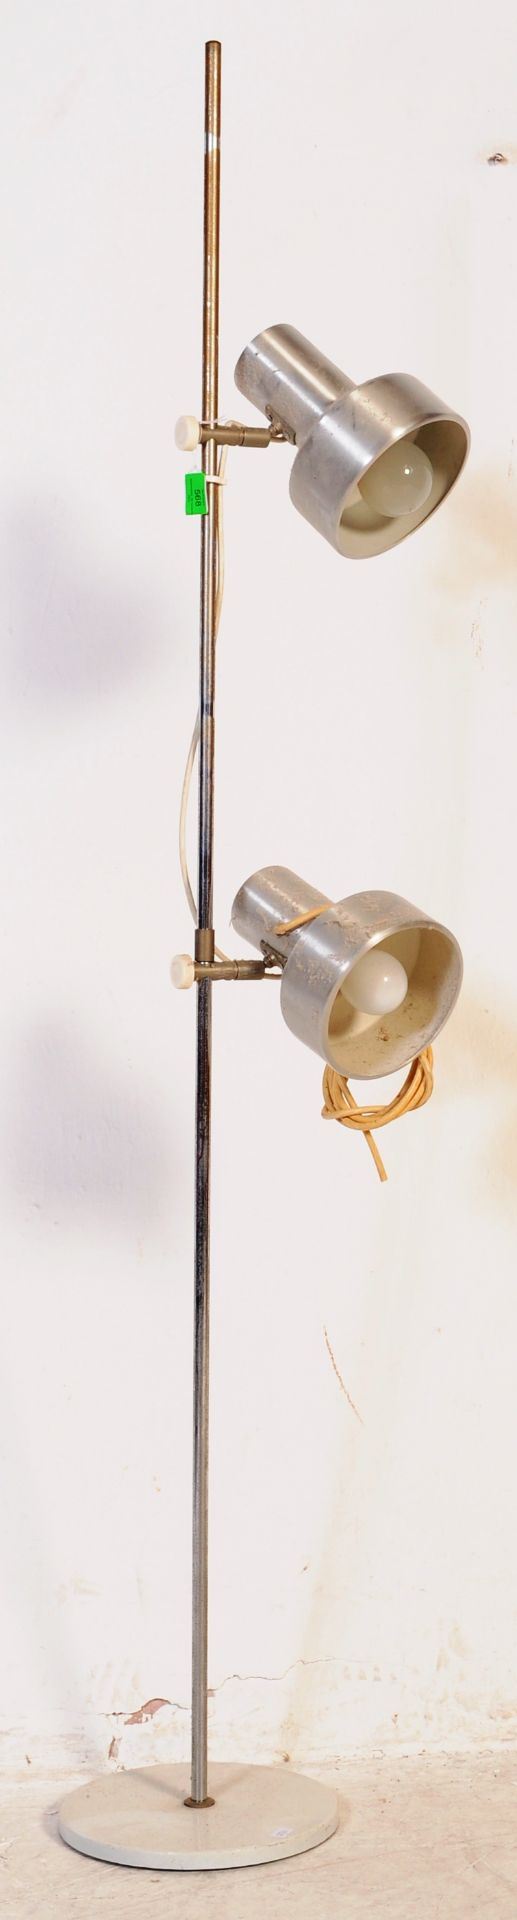 RETRO DANISH ALUMINIUM FLOOR STANDING LAMP LIGHT BY FRANSON